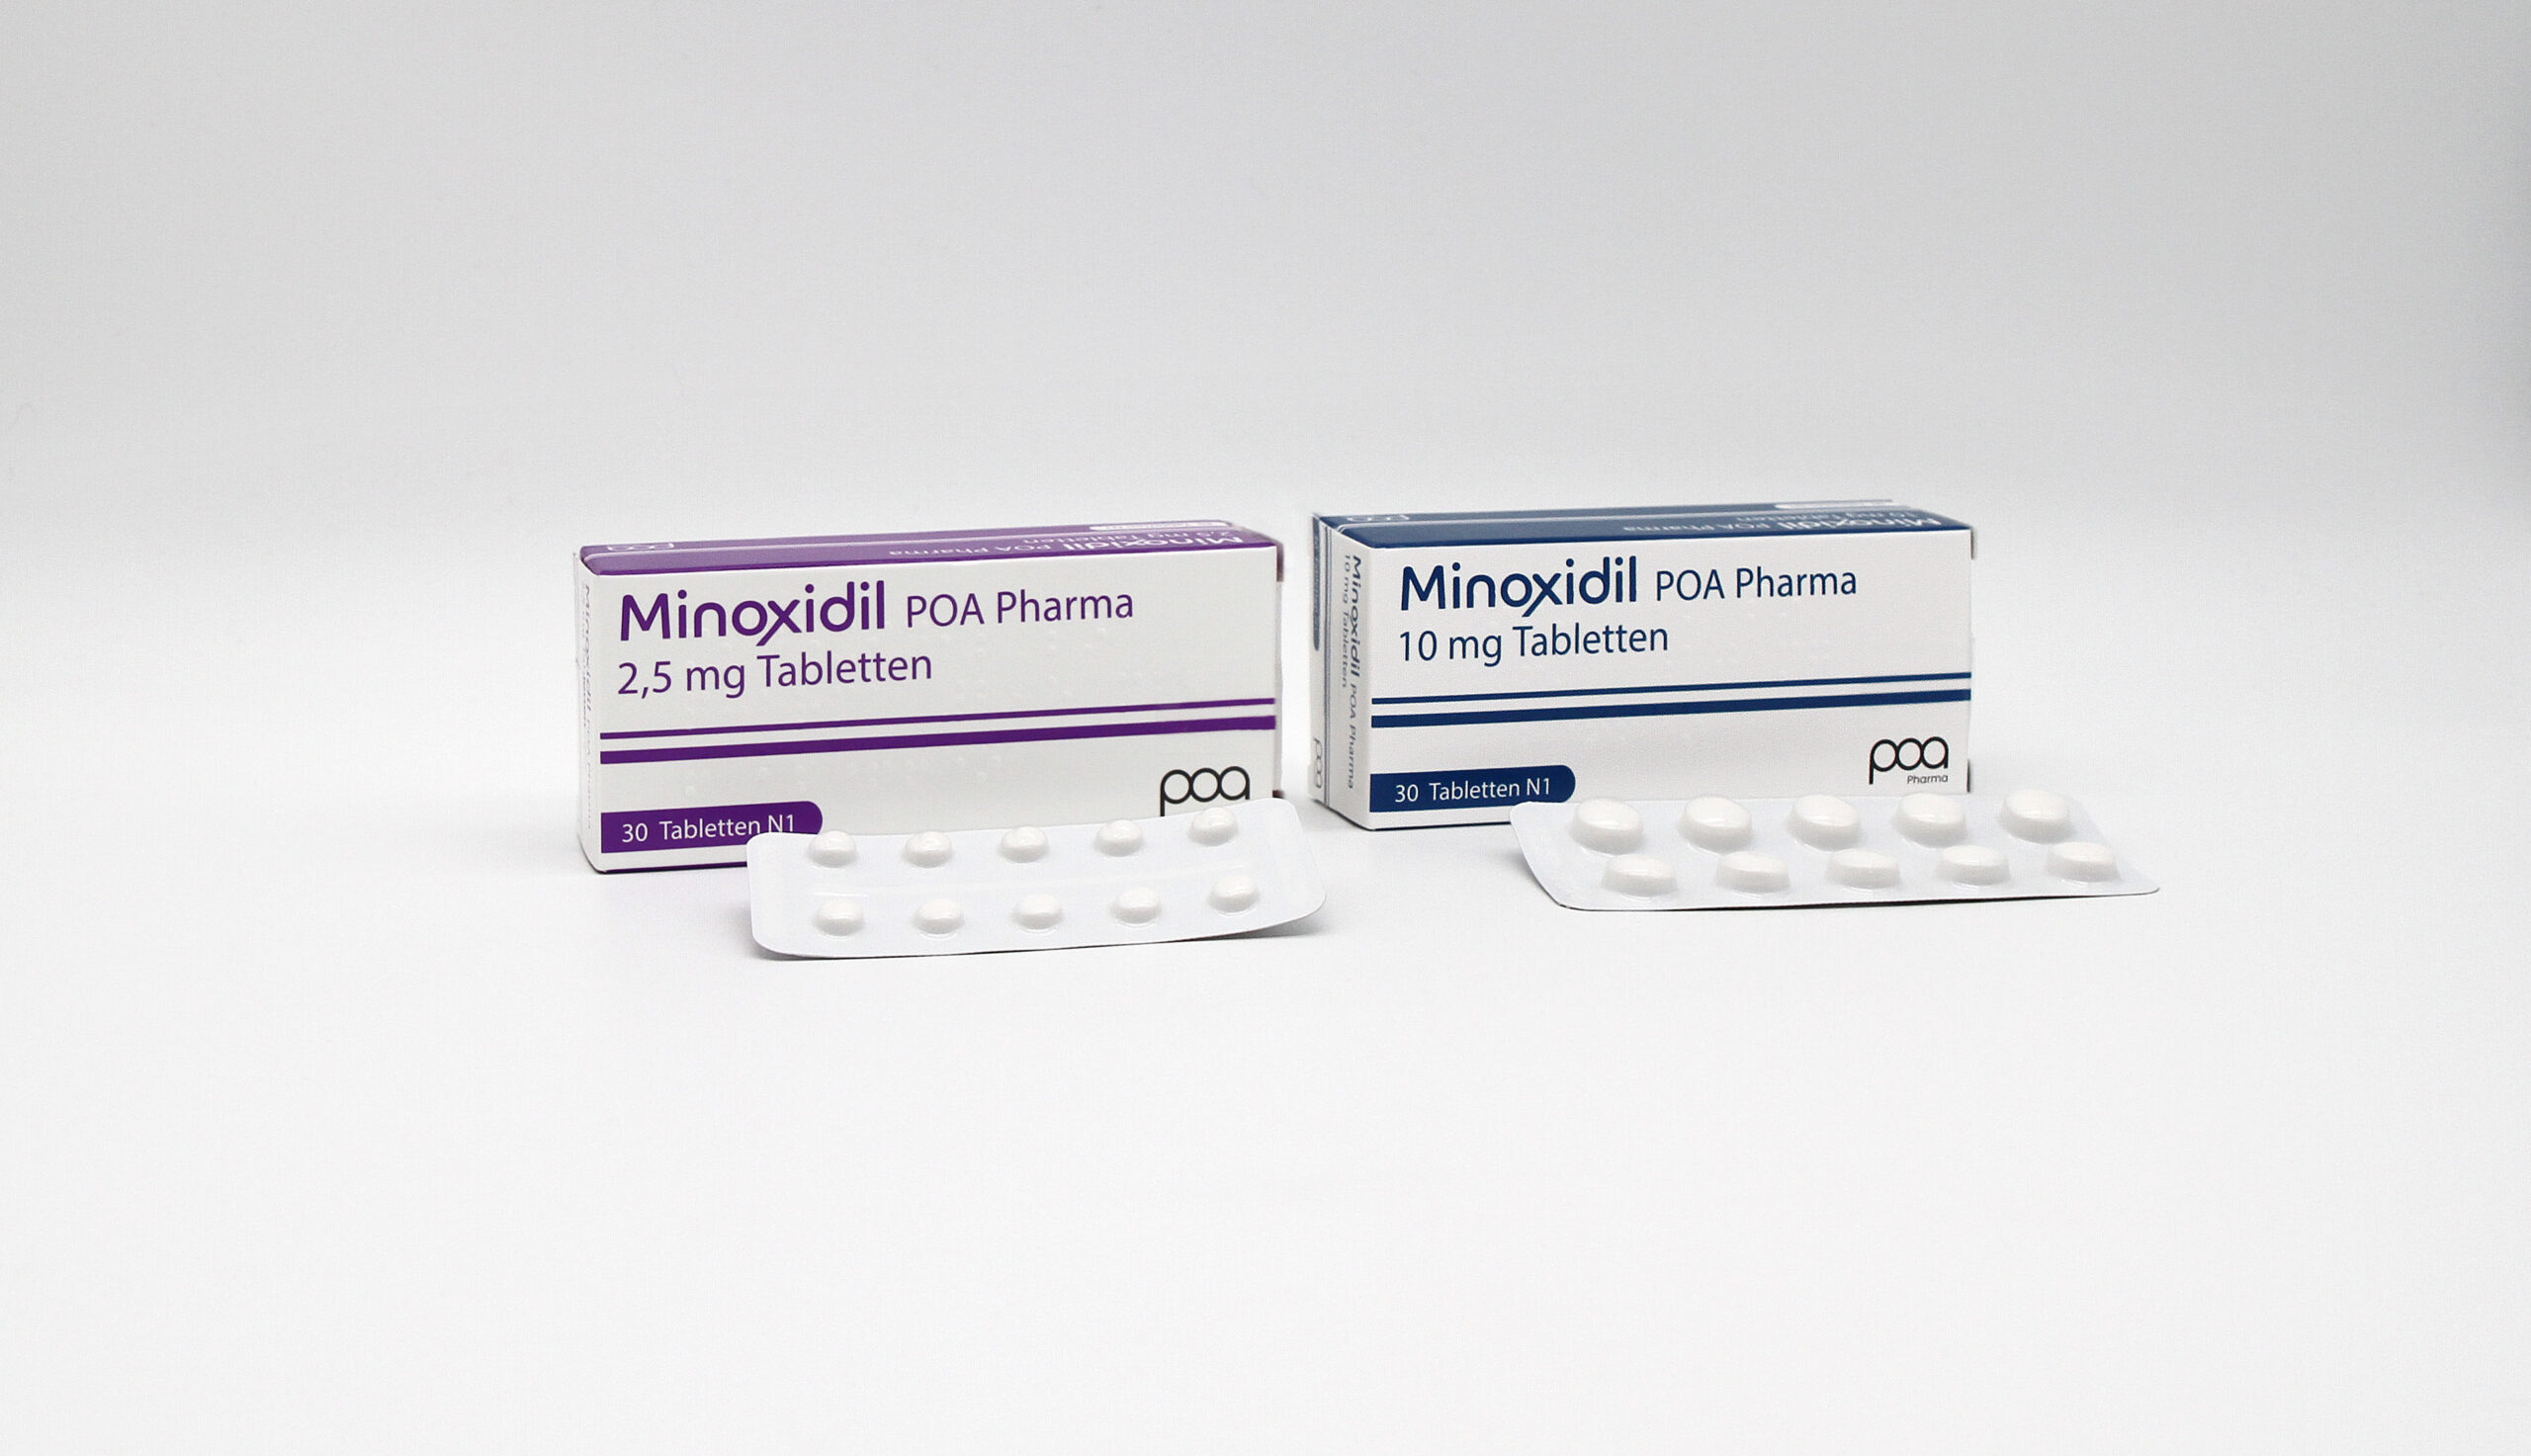 Minoxidil POA Pharma Tablets